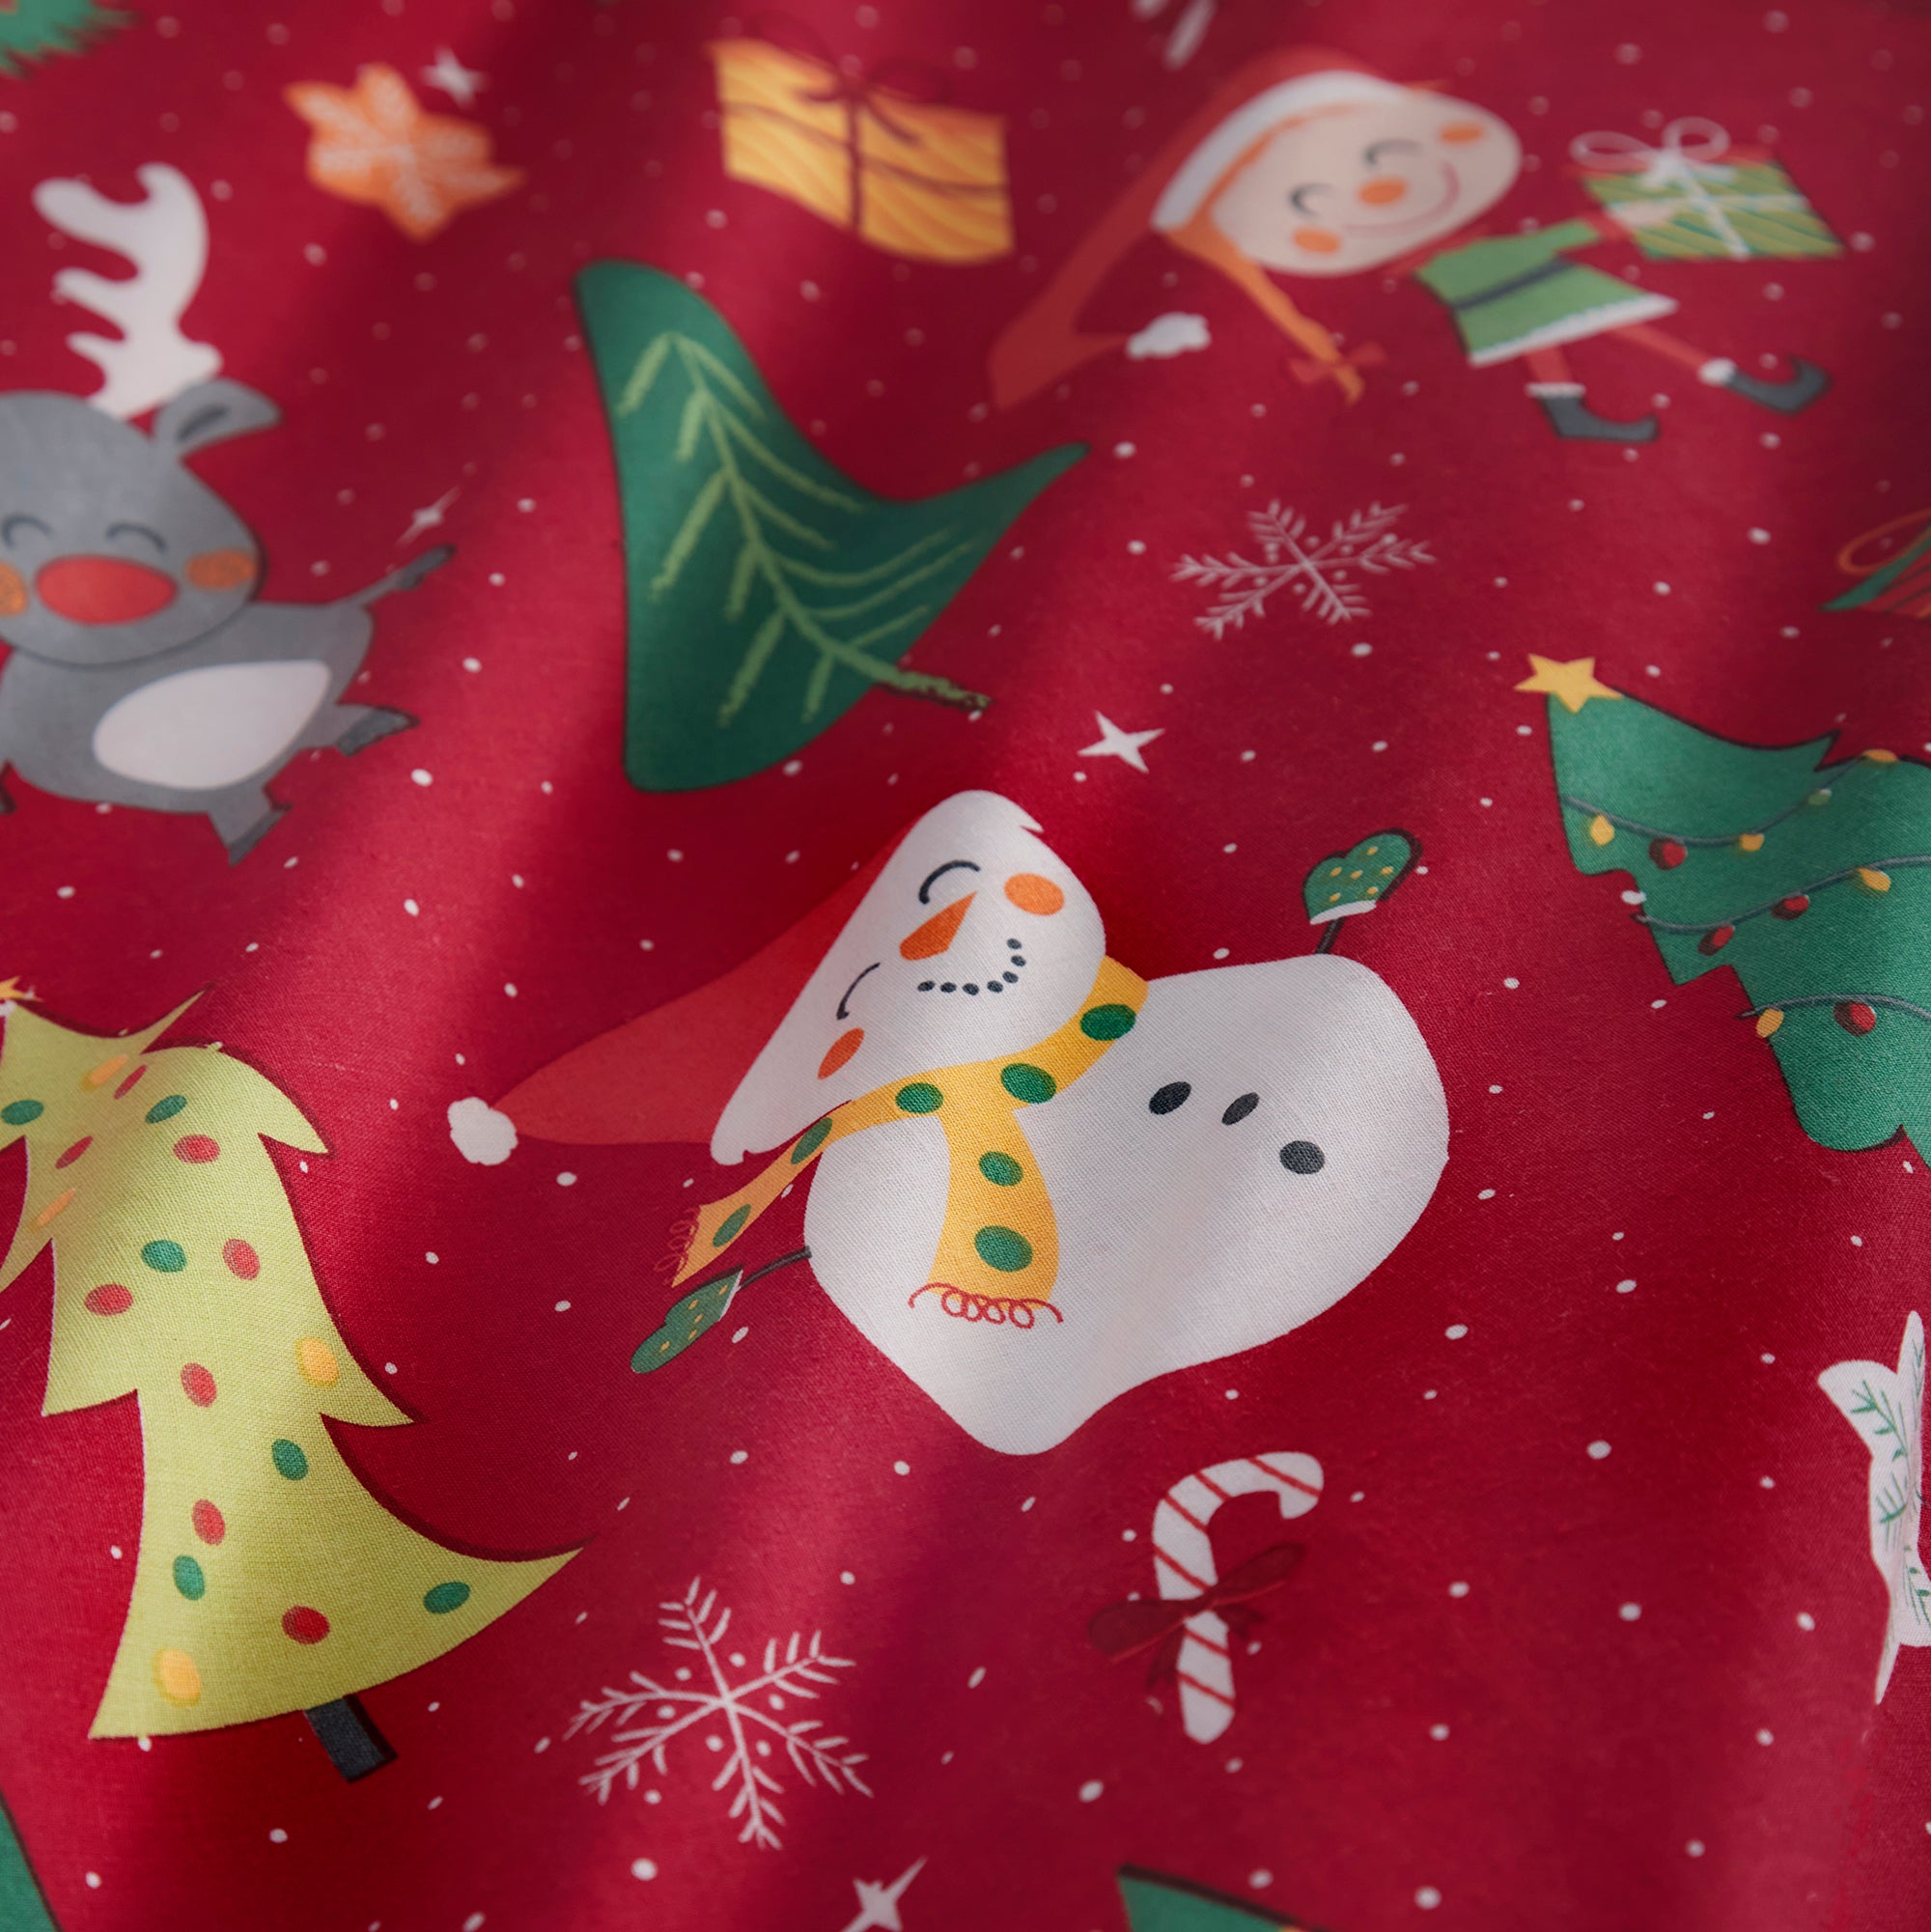 Elf & Santa - Easy Care Duvet Cover Set in Multi - By Bedlam Christmas